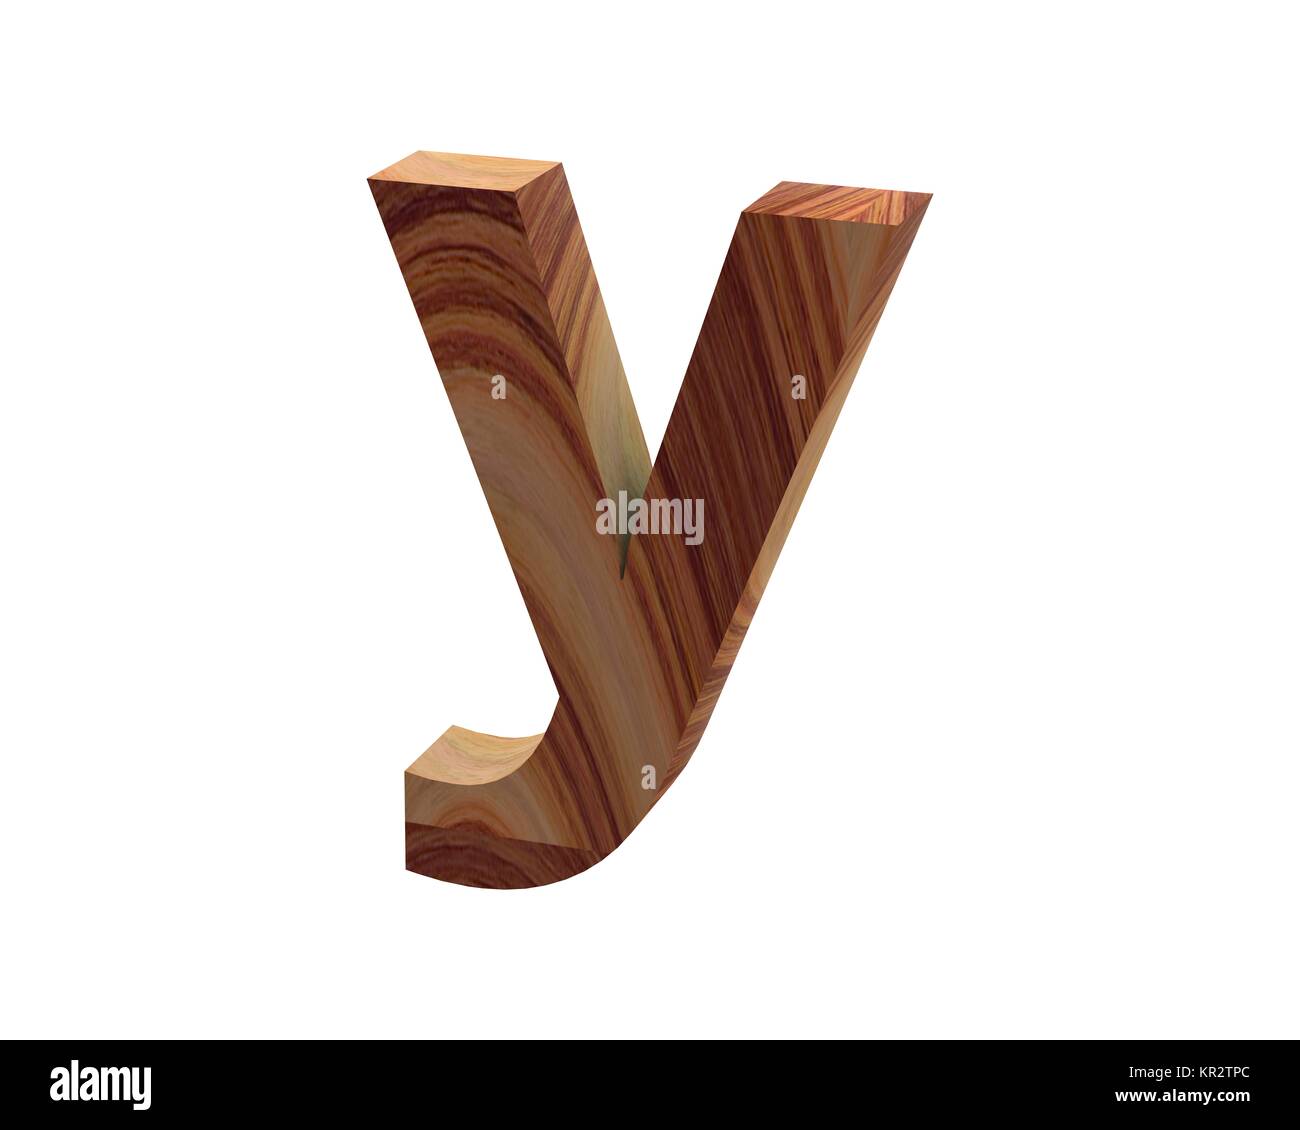 wood y font 3D Stock Photo